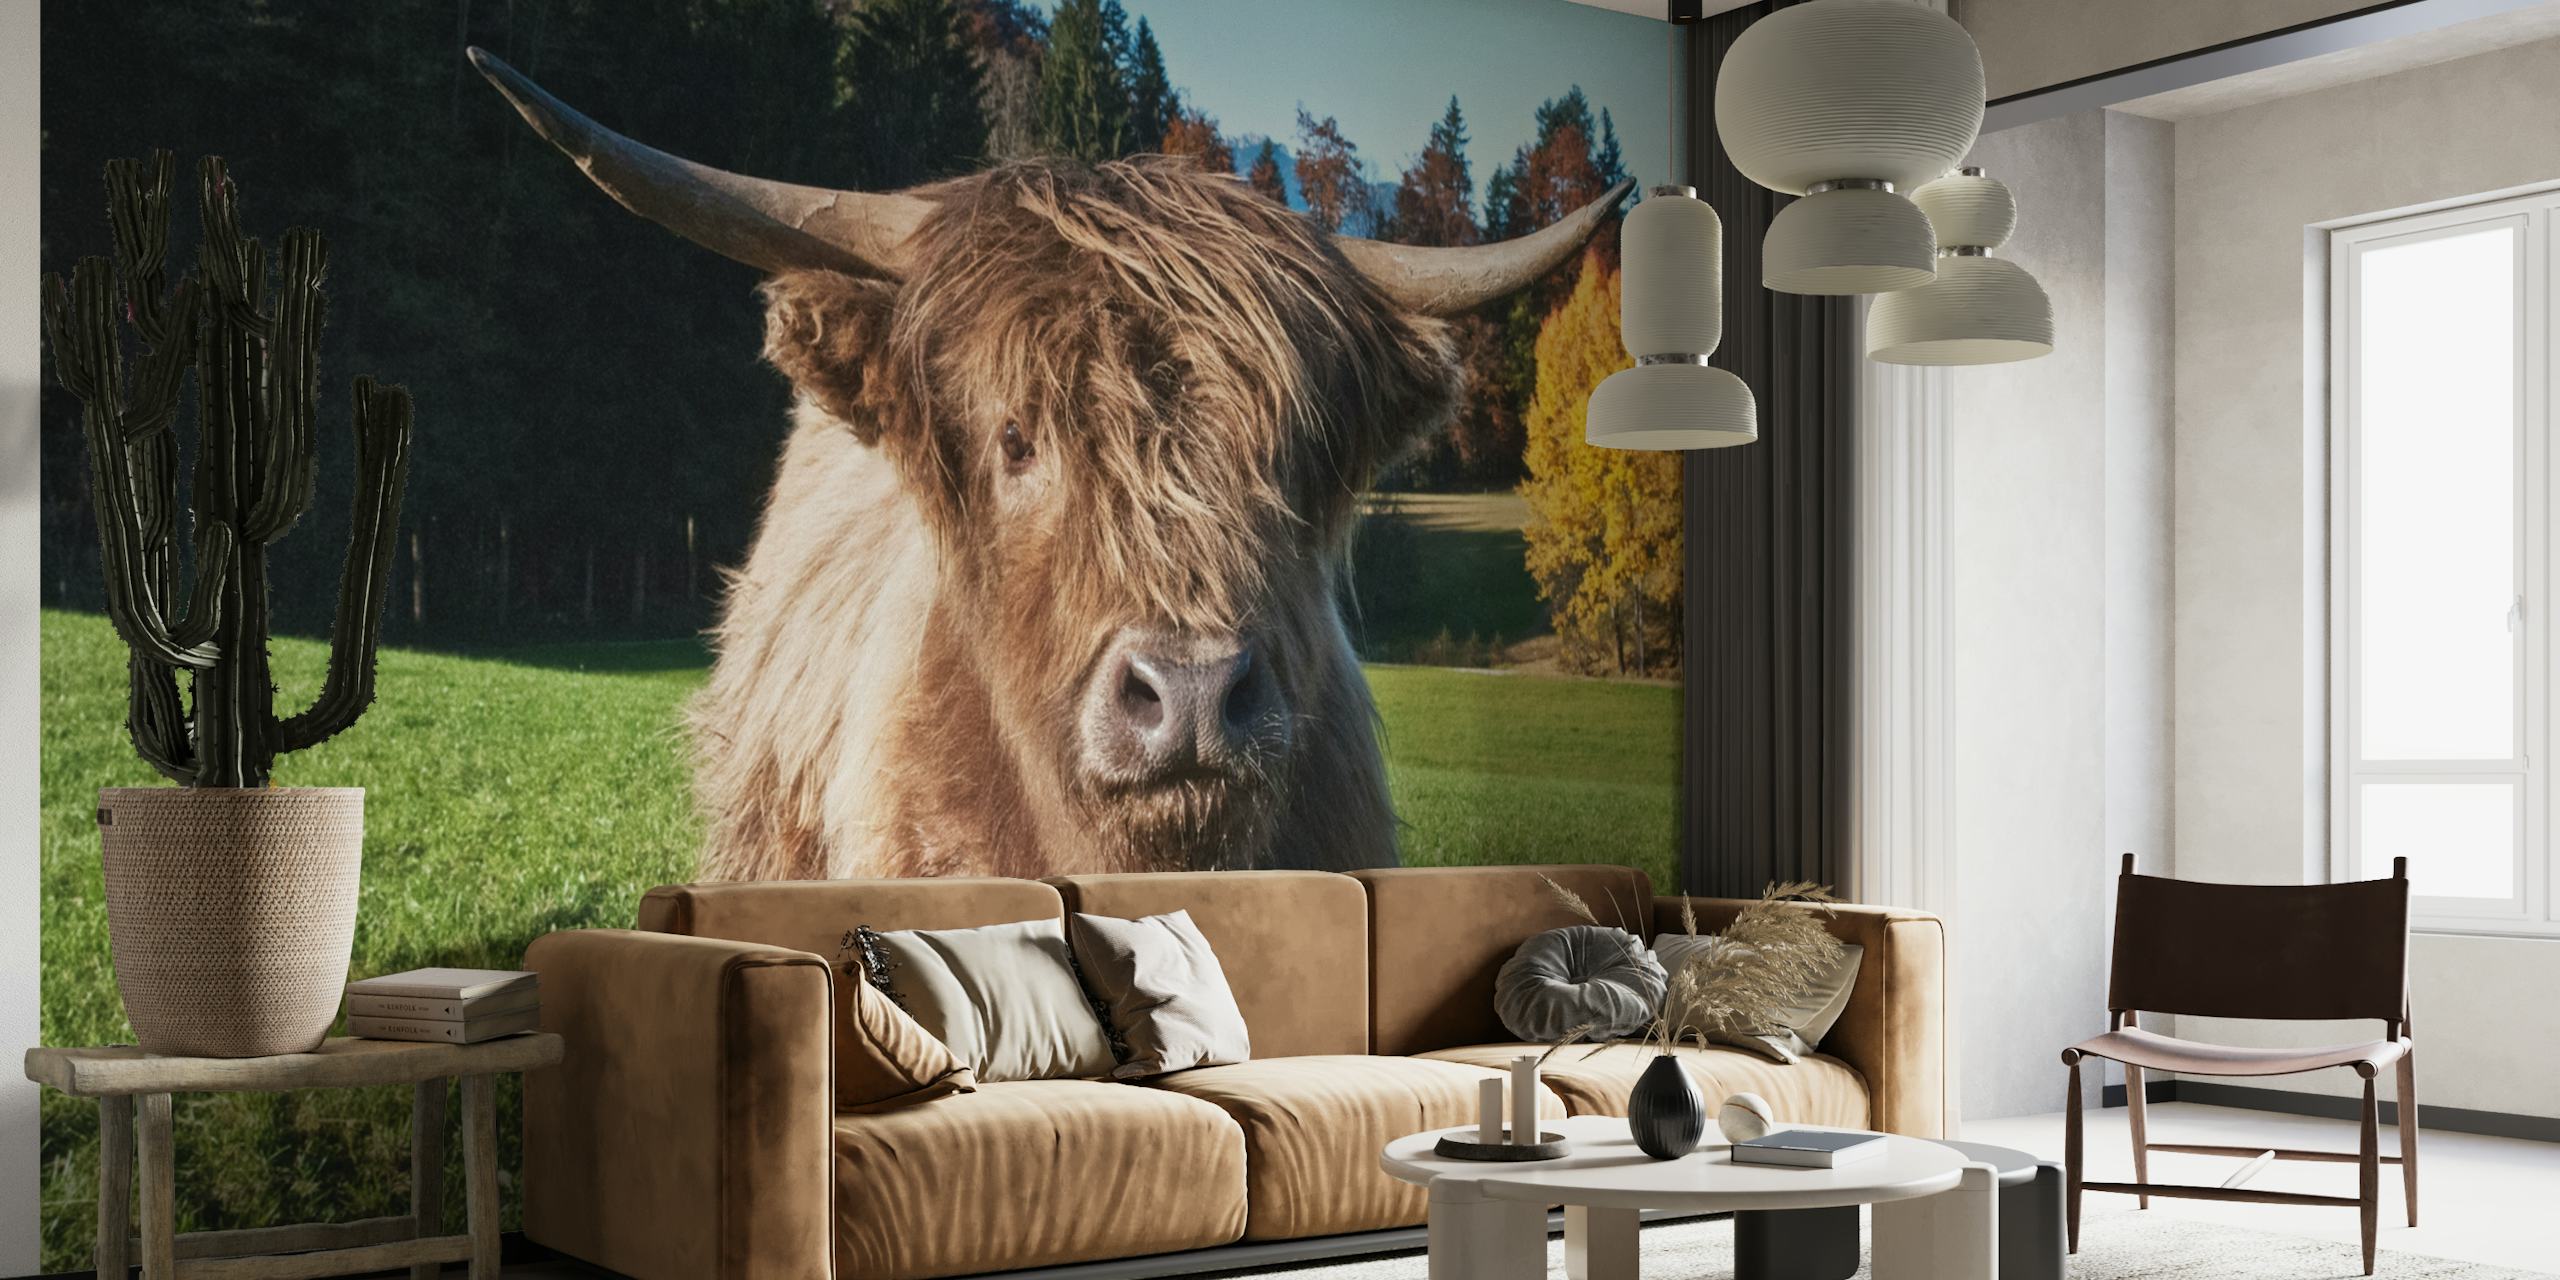 Cute Highland Cow 2 wallpaper